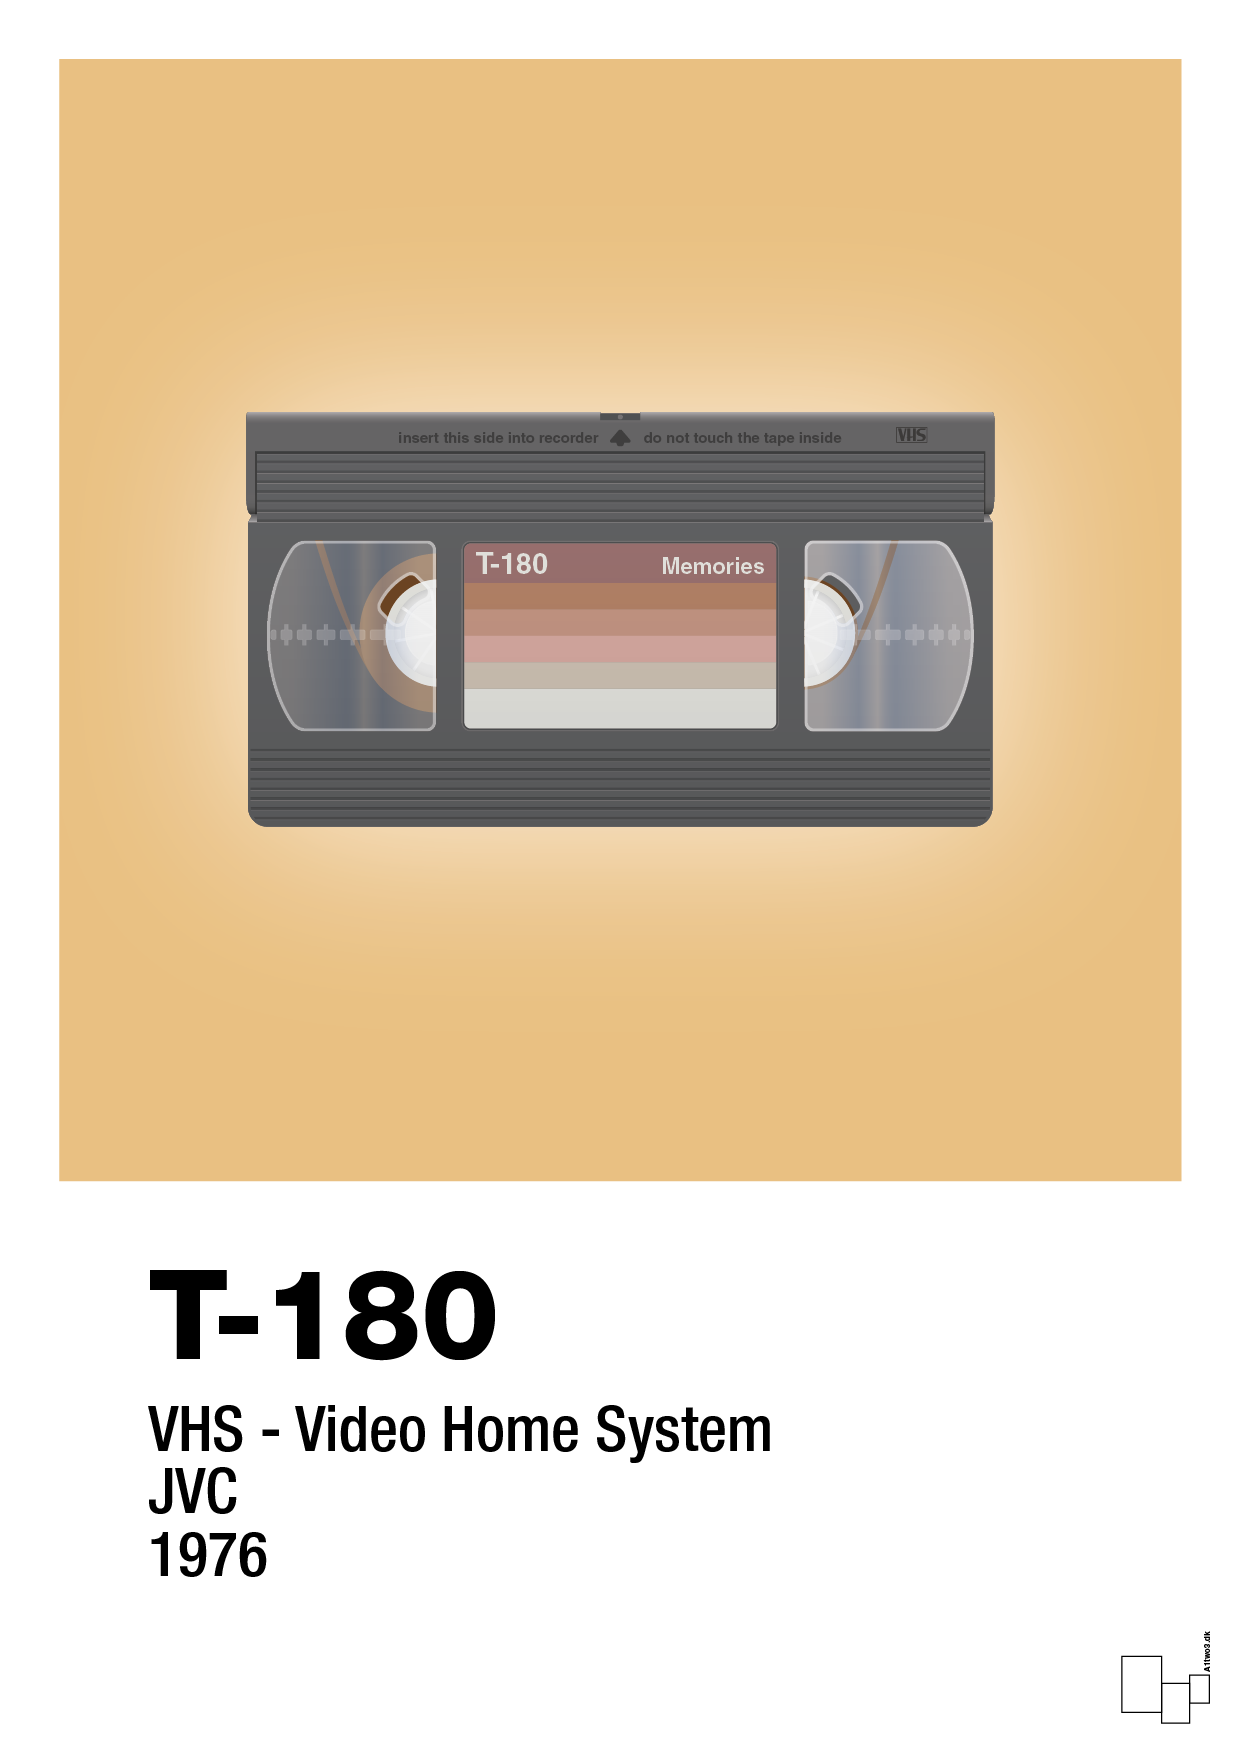 videobånd t-180 - Plakat med Grafik i Charismatic